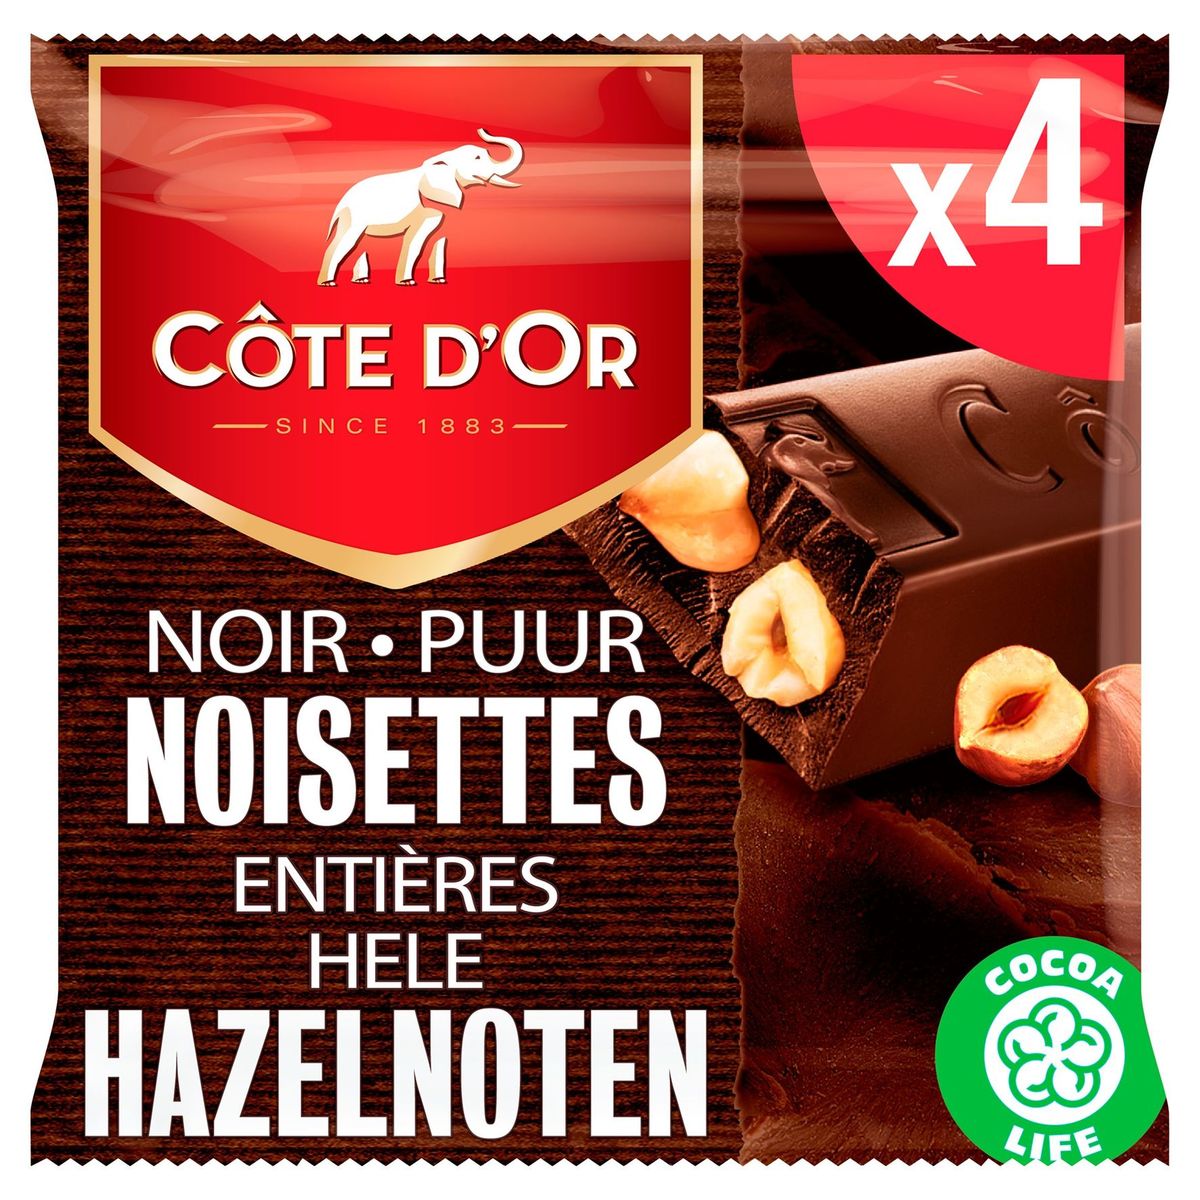 Côte d'Or Pure Chocolade Reep Hele Hazelnoten 4-Pack